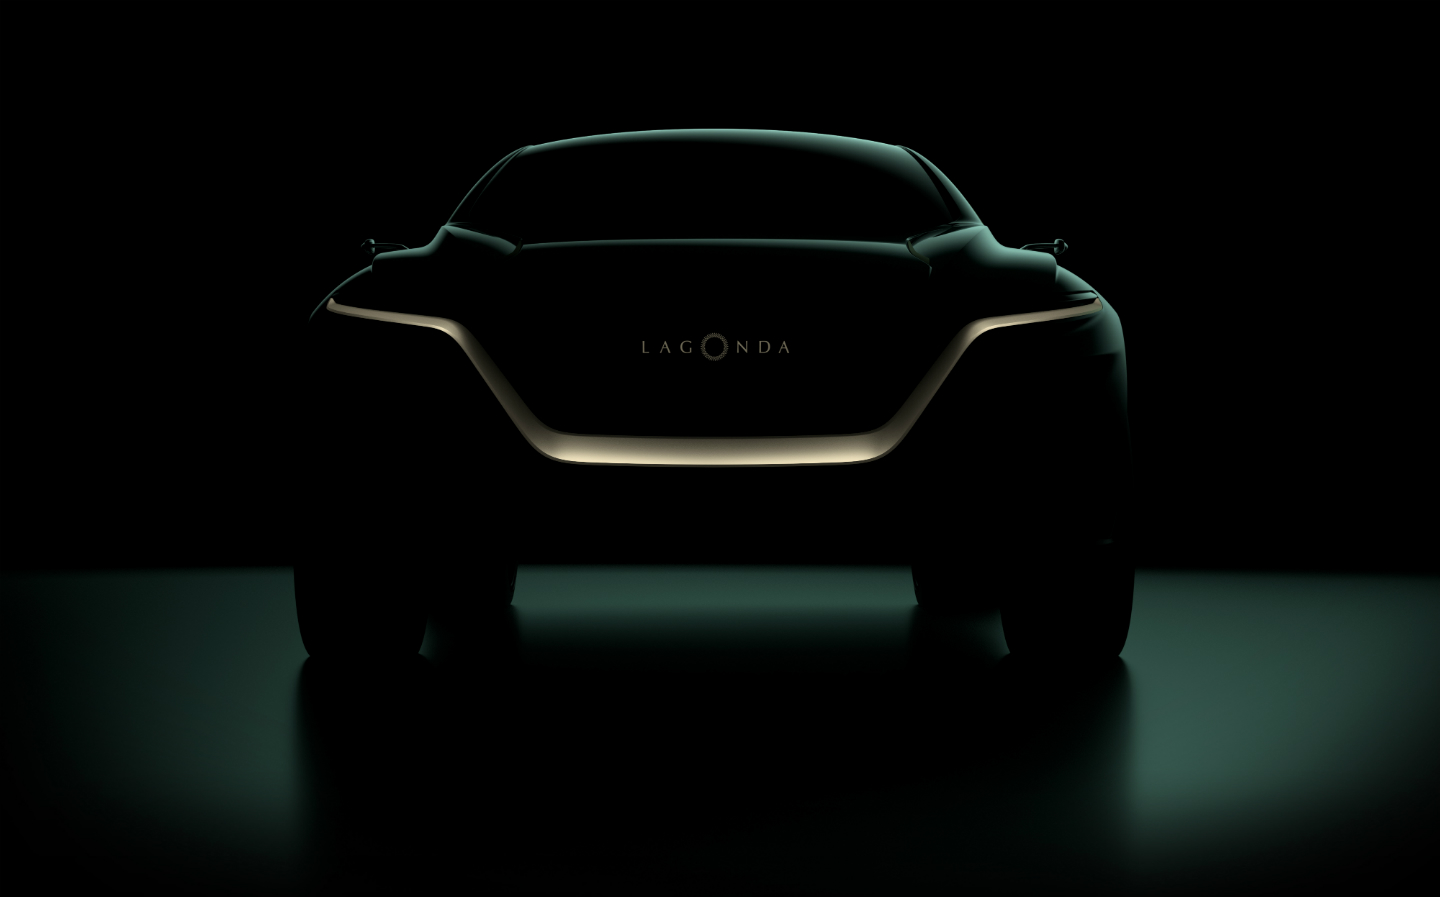 Reborn luxury car maker Lagonda teases its first pure-electric model